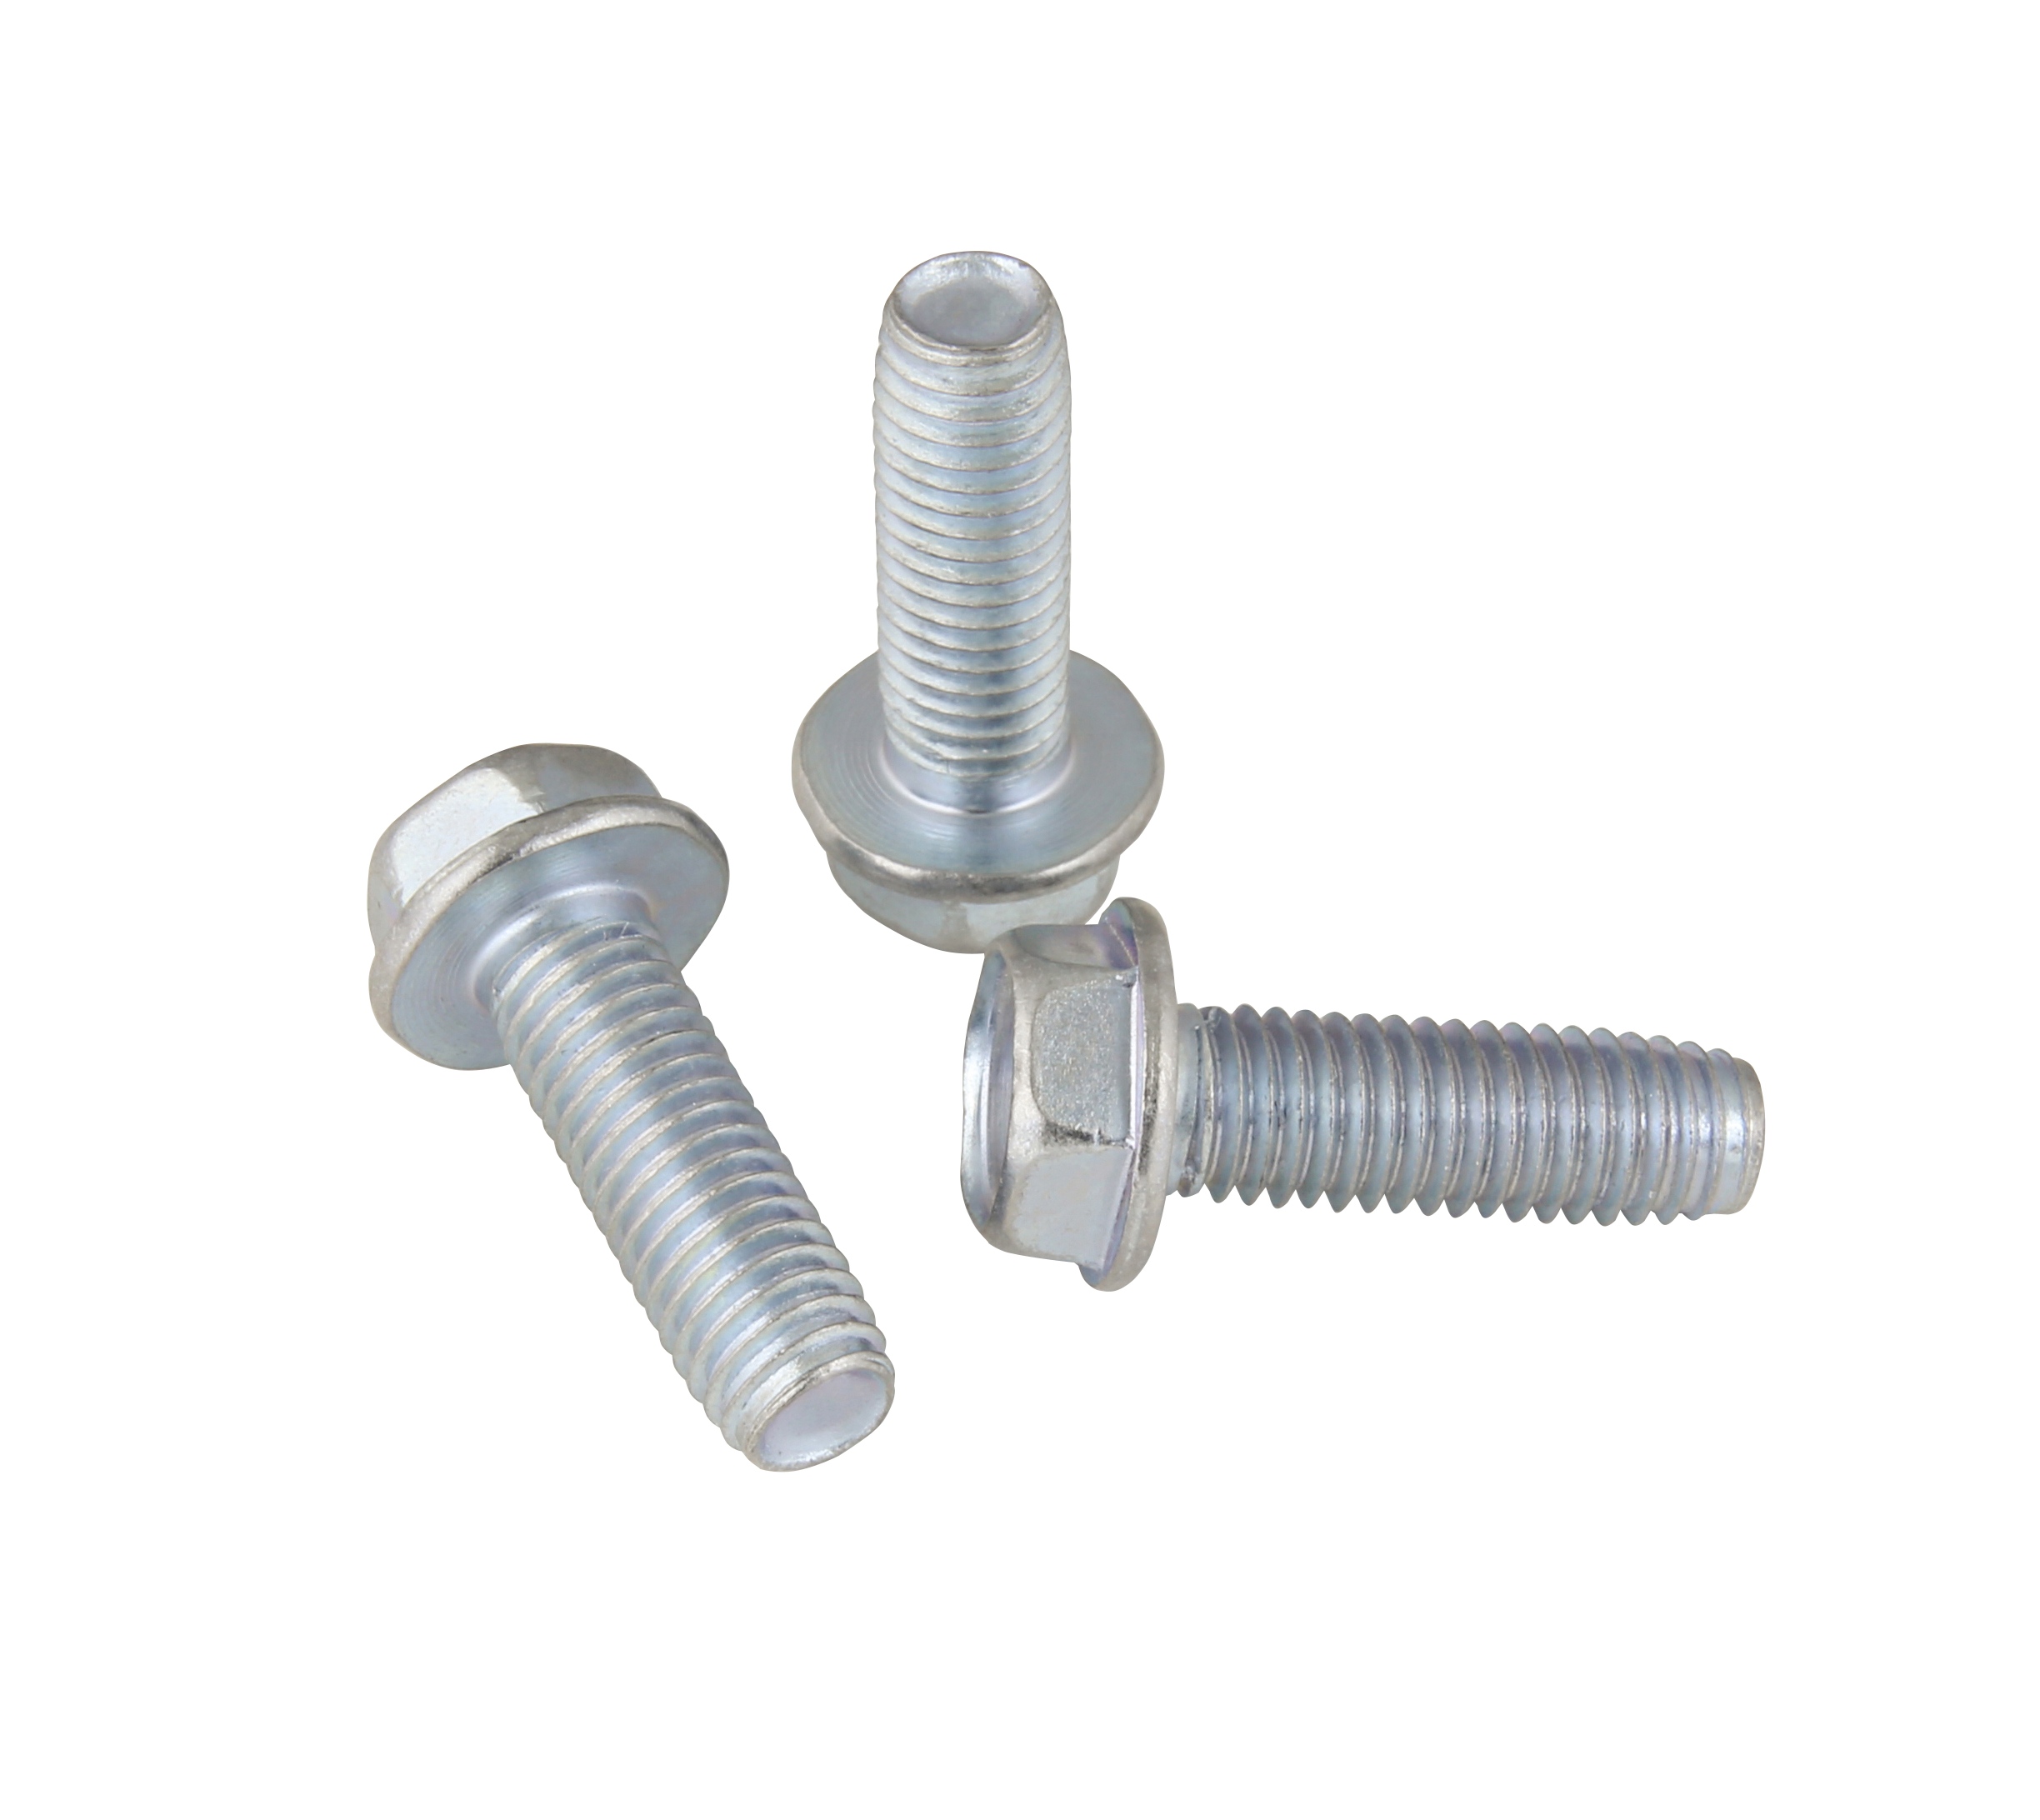 Thread rolling screw - Alternative to Taptite®